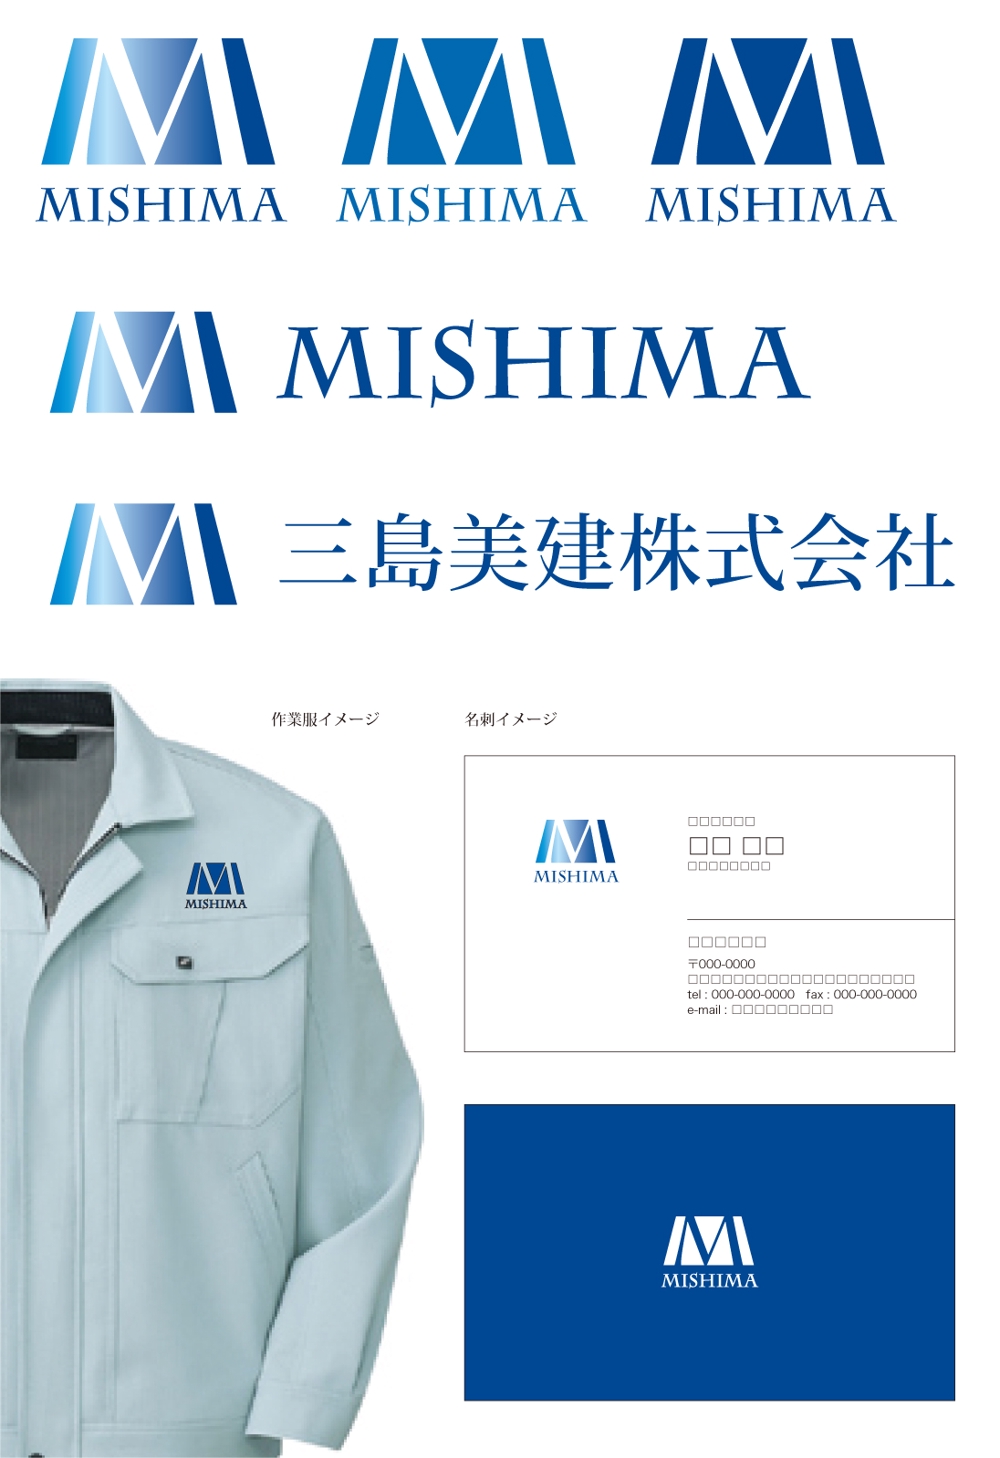 mishima.ss.jpg